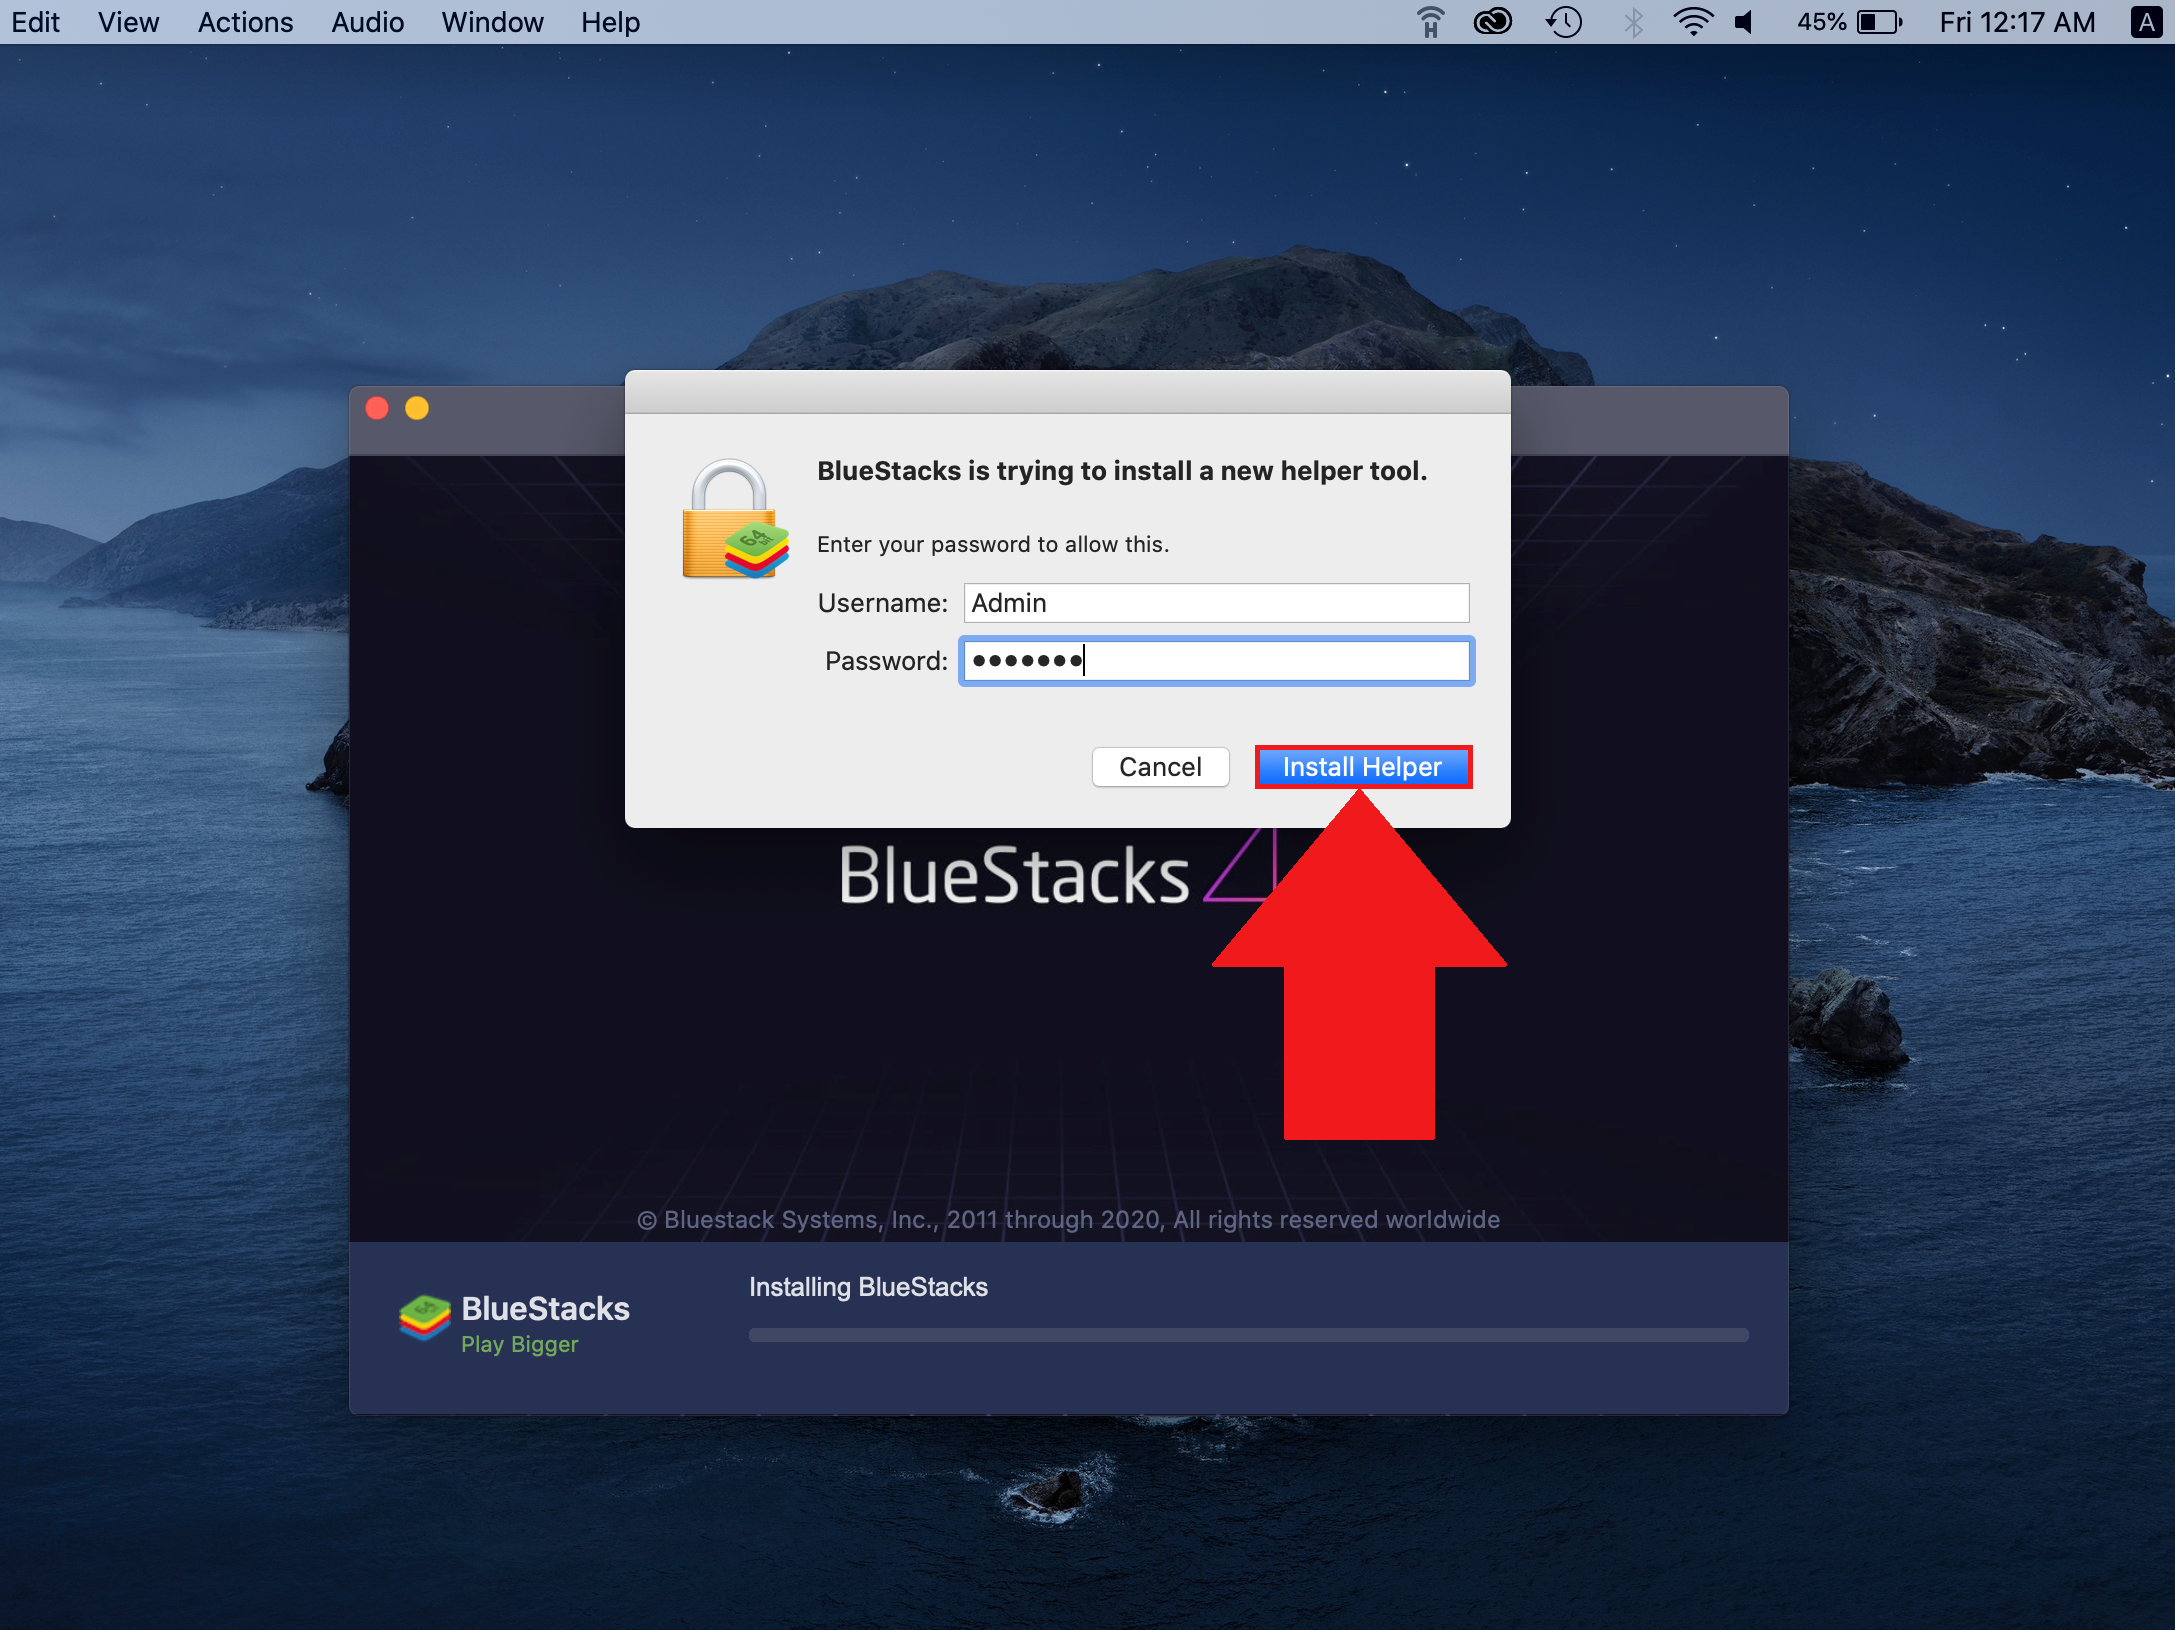 bluestacks for mac 10.6.3